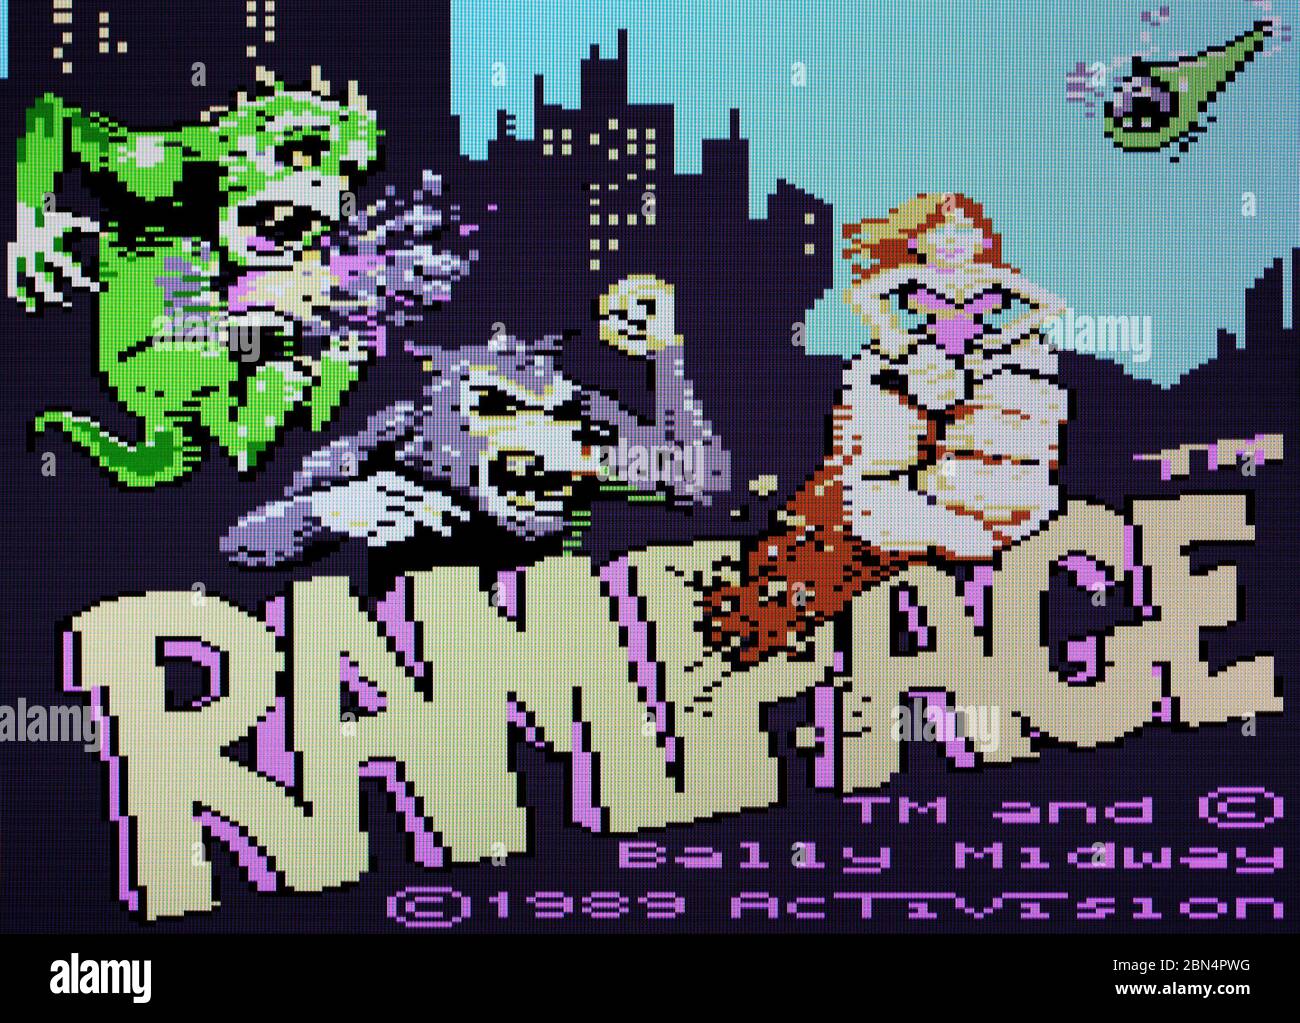 Rampage - Atari 7800 Videgame Stock Photo